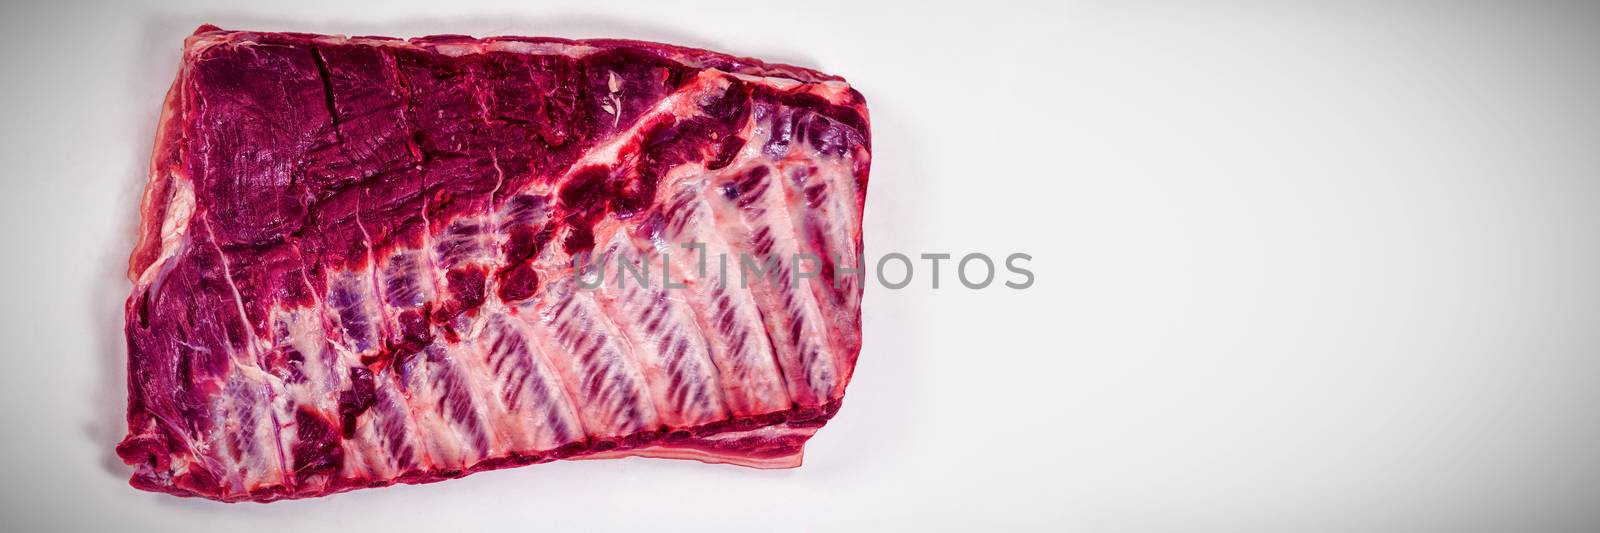 Beef brisket against white background by Wavebreakmedia